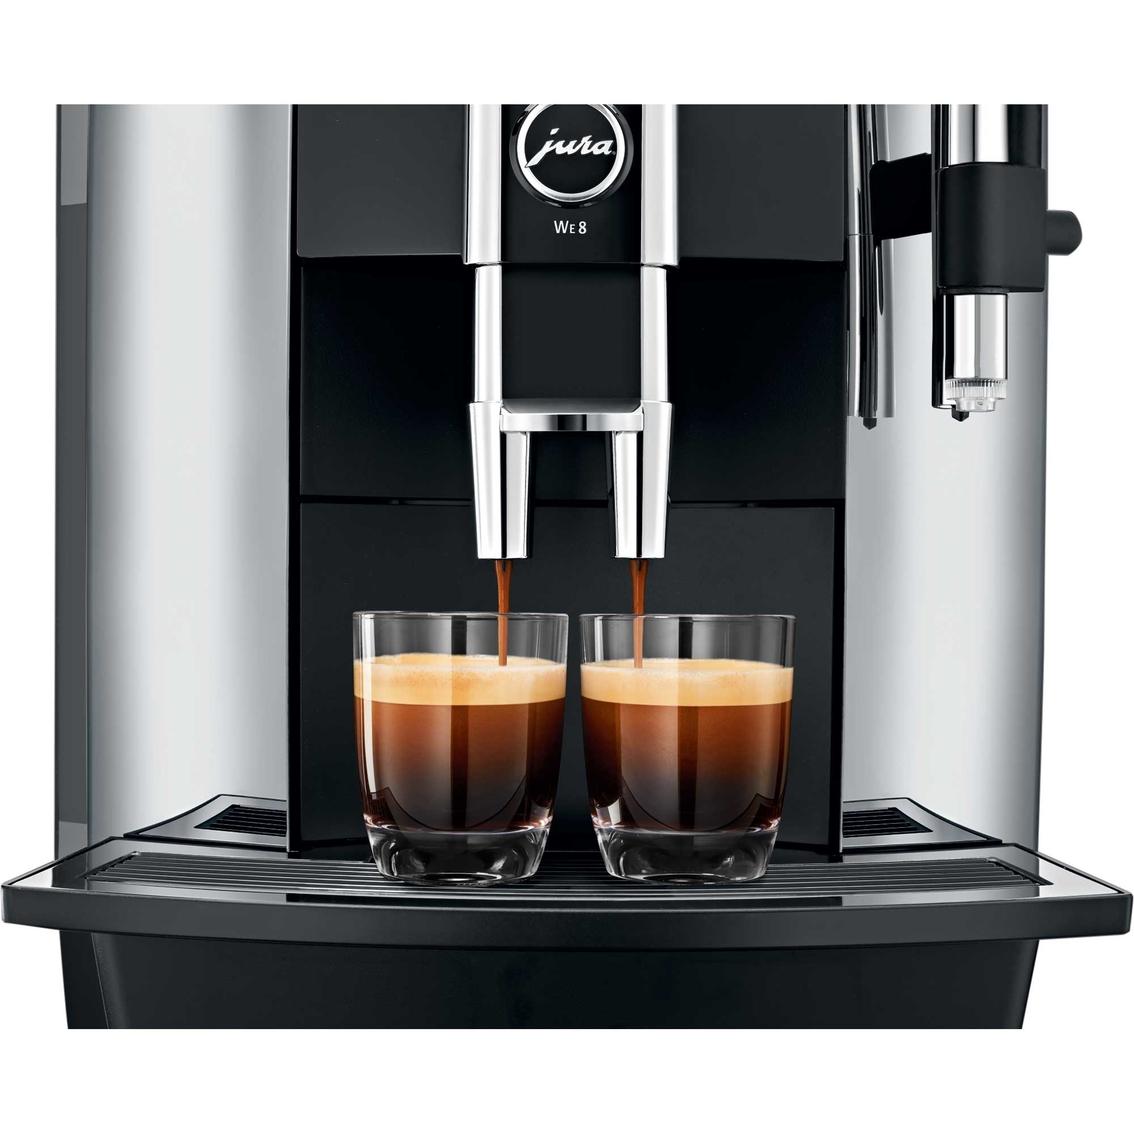 Jura WE 8 Coffee Maker - Image 4 of 9